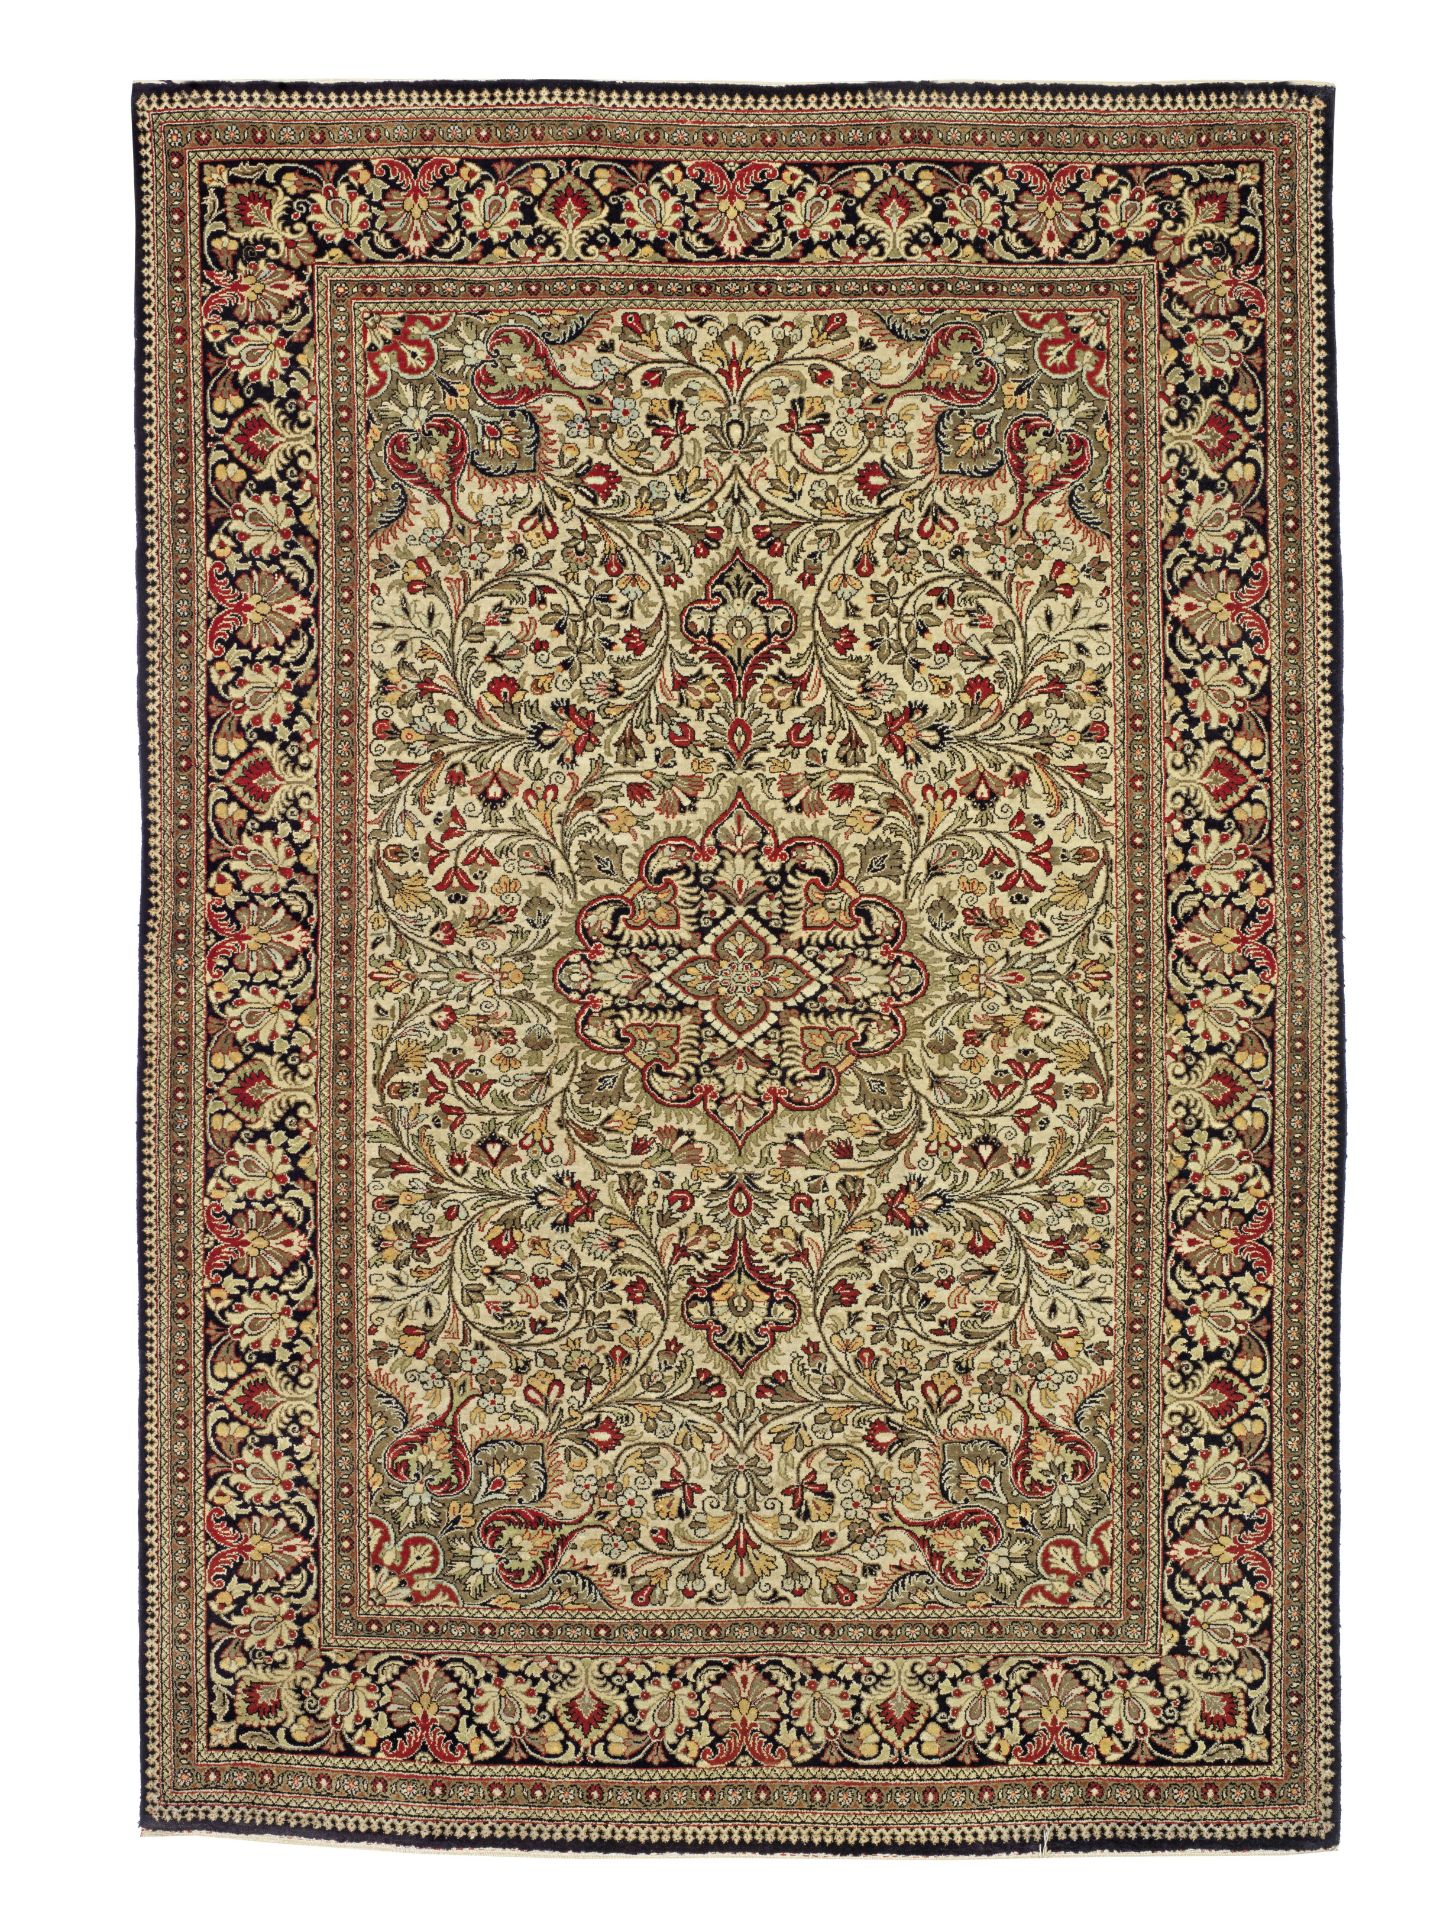 A Ghom ivory ground silk rug, Central Persia, 157cm x 107cm